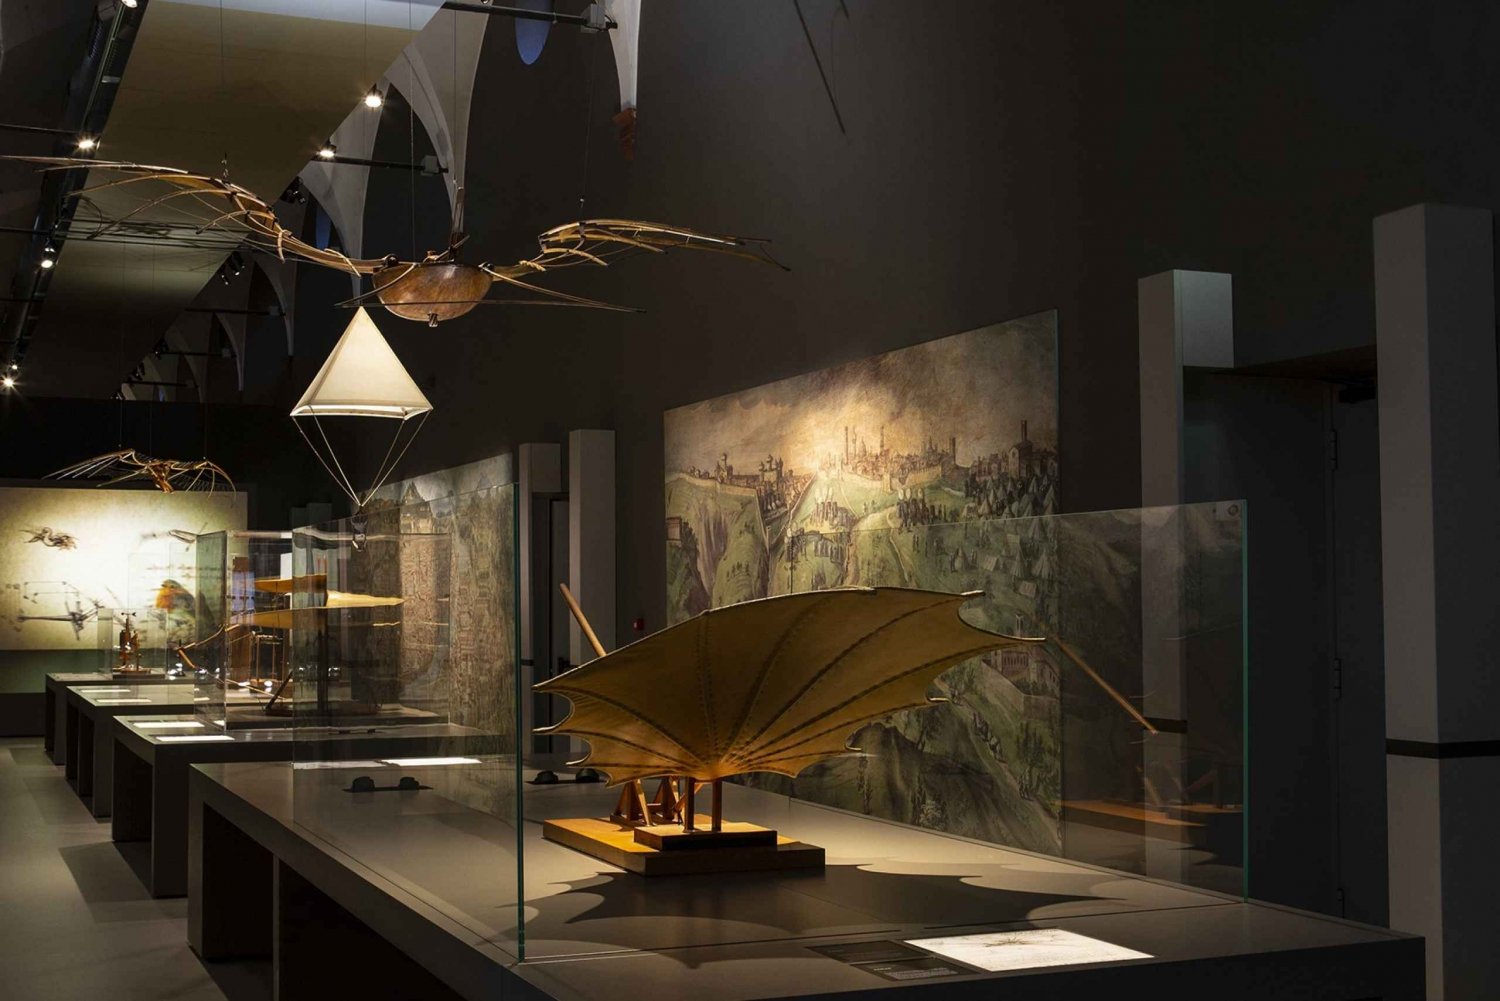 Milan: Science and Technology Leonardo da Vinci Museum Entry